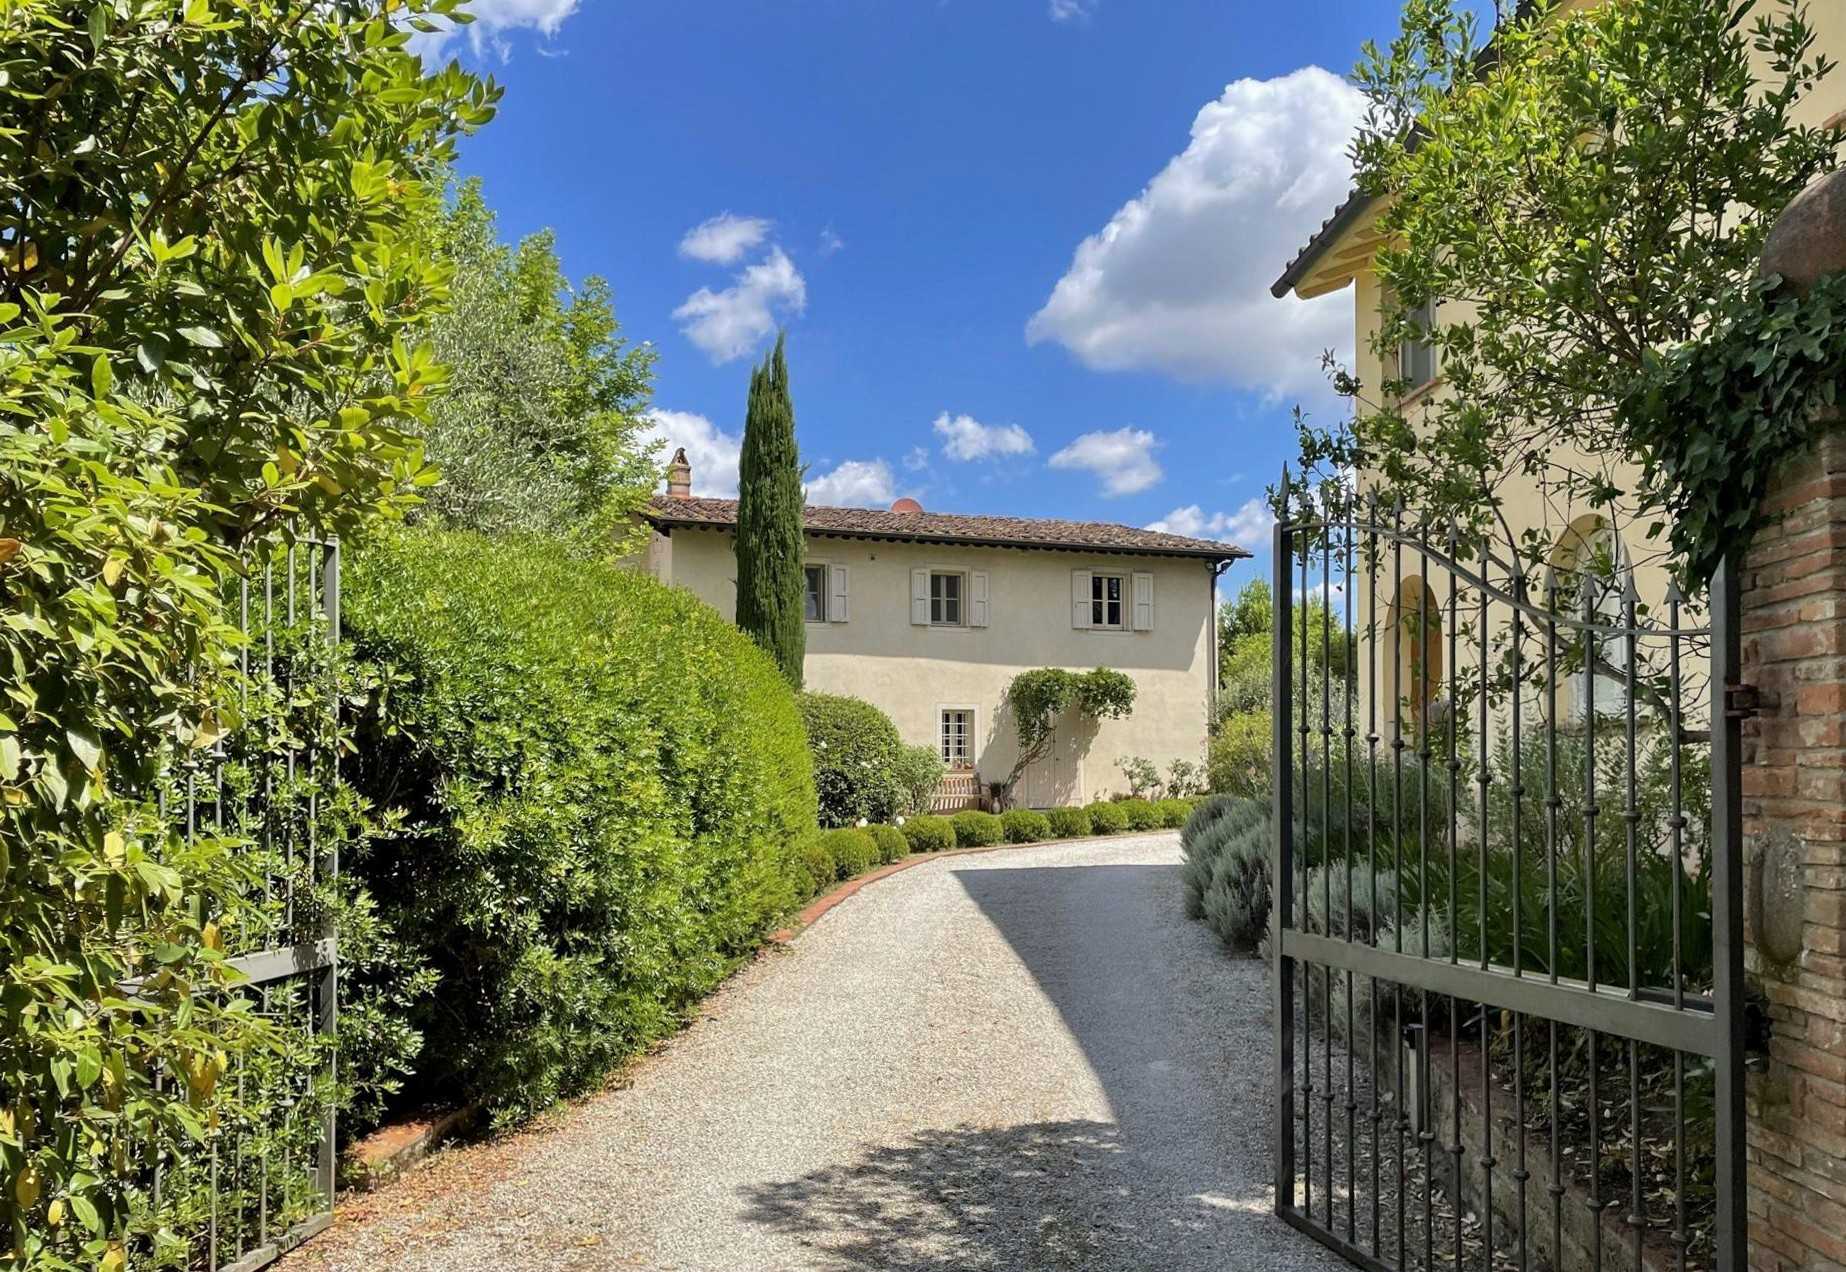 Photos Villa avec 7 hectares de terrain entre Pise et Florence